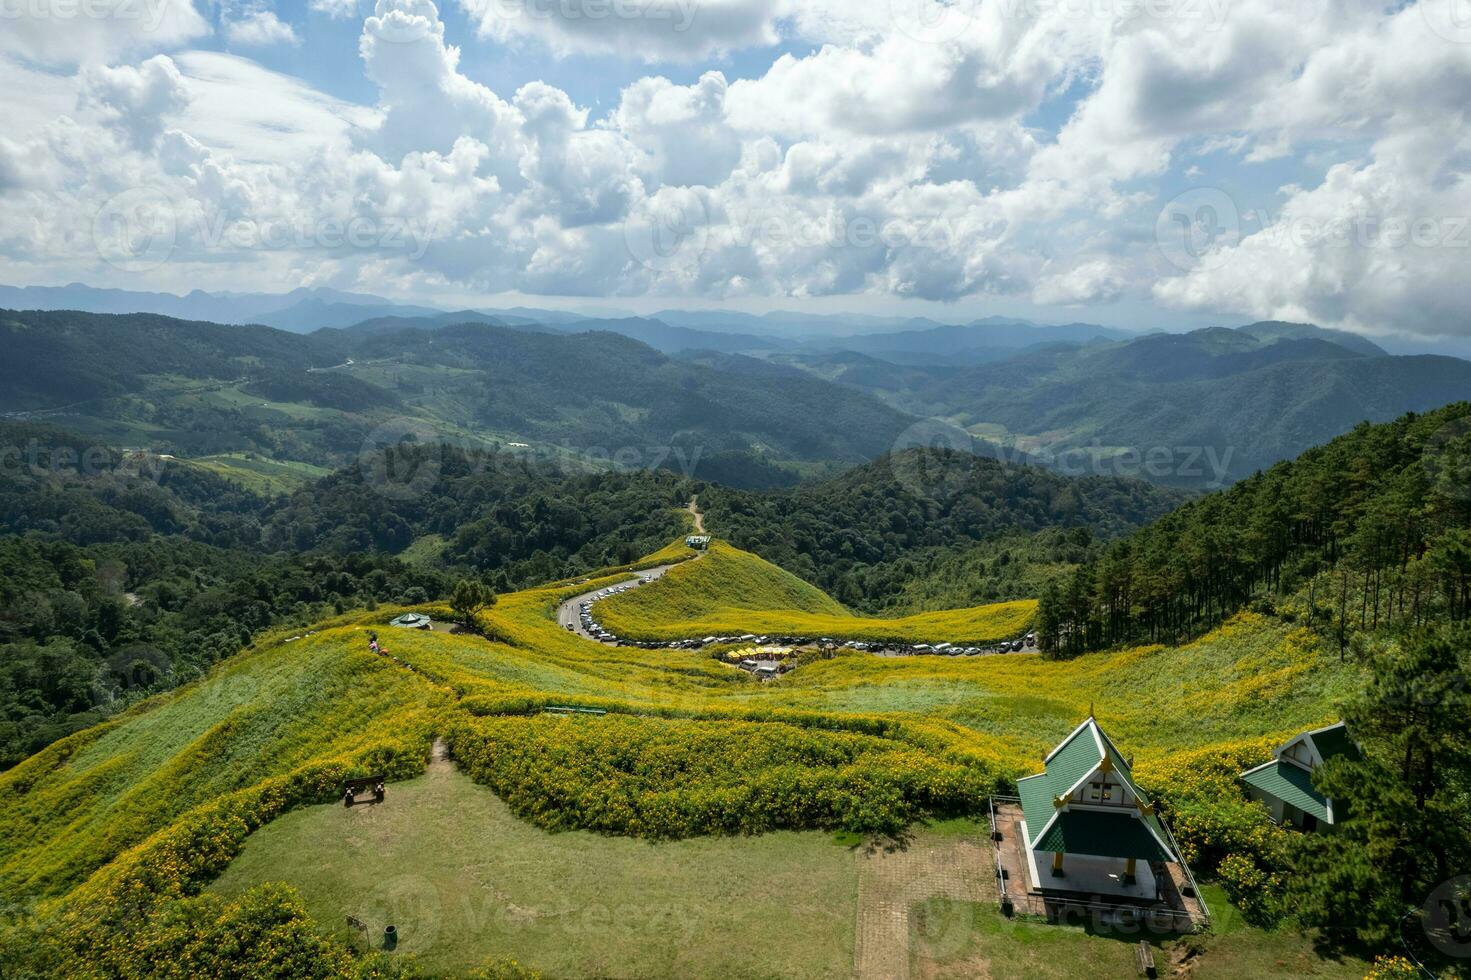 Antenne Aussicht von Mexikaner Sonnenblume Felder auf Berge beim doi mae u kho, mae Hong Sohn, Thailand. foto